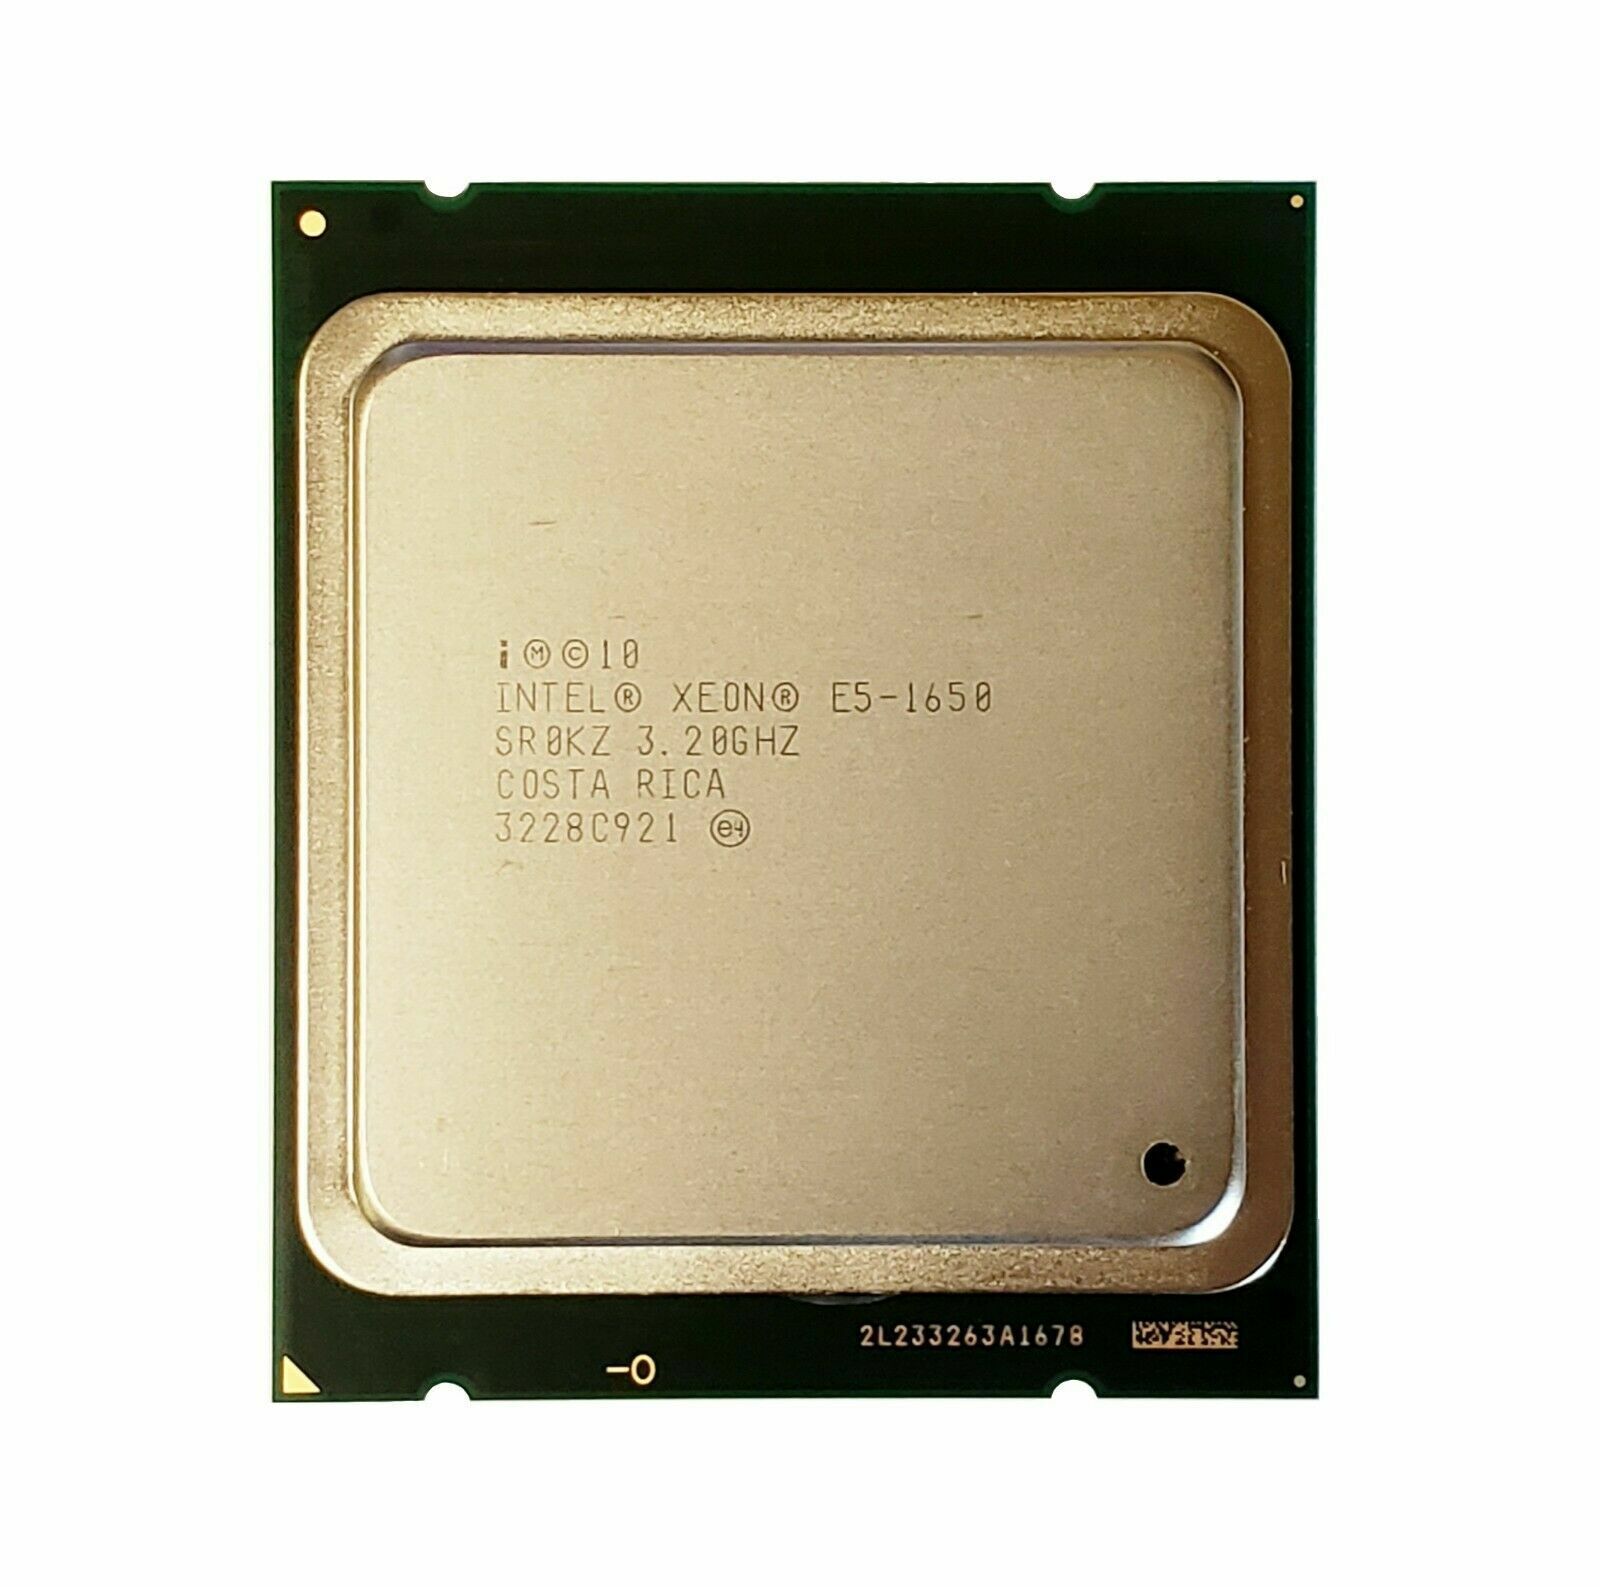 SR0KZ INTEL XEON E5-1650 6 CORE 3.20GHz LGA 2011 CPU PROCESSOR